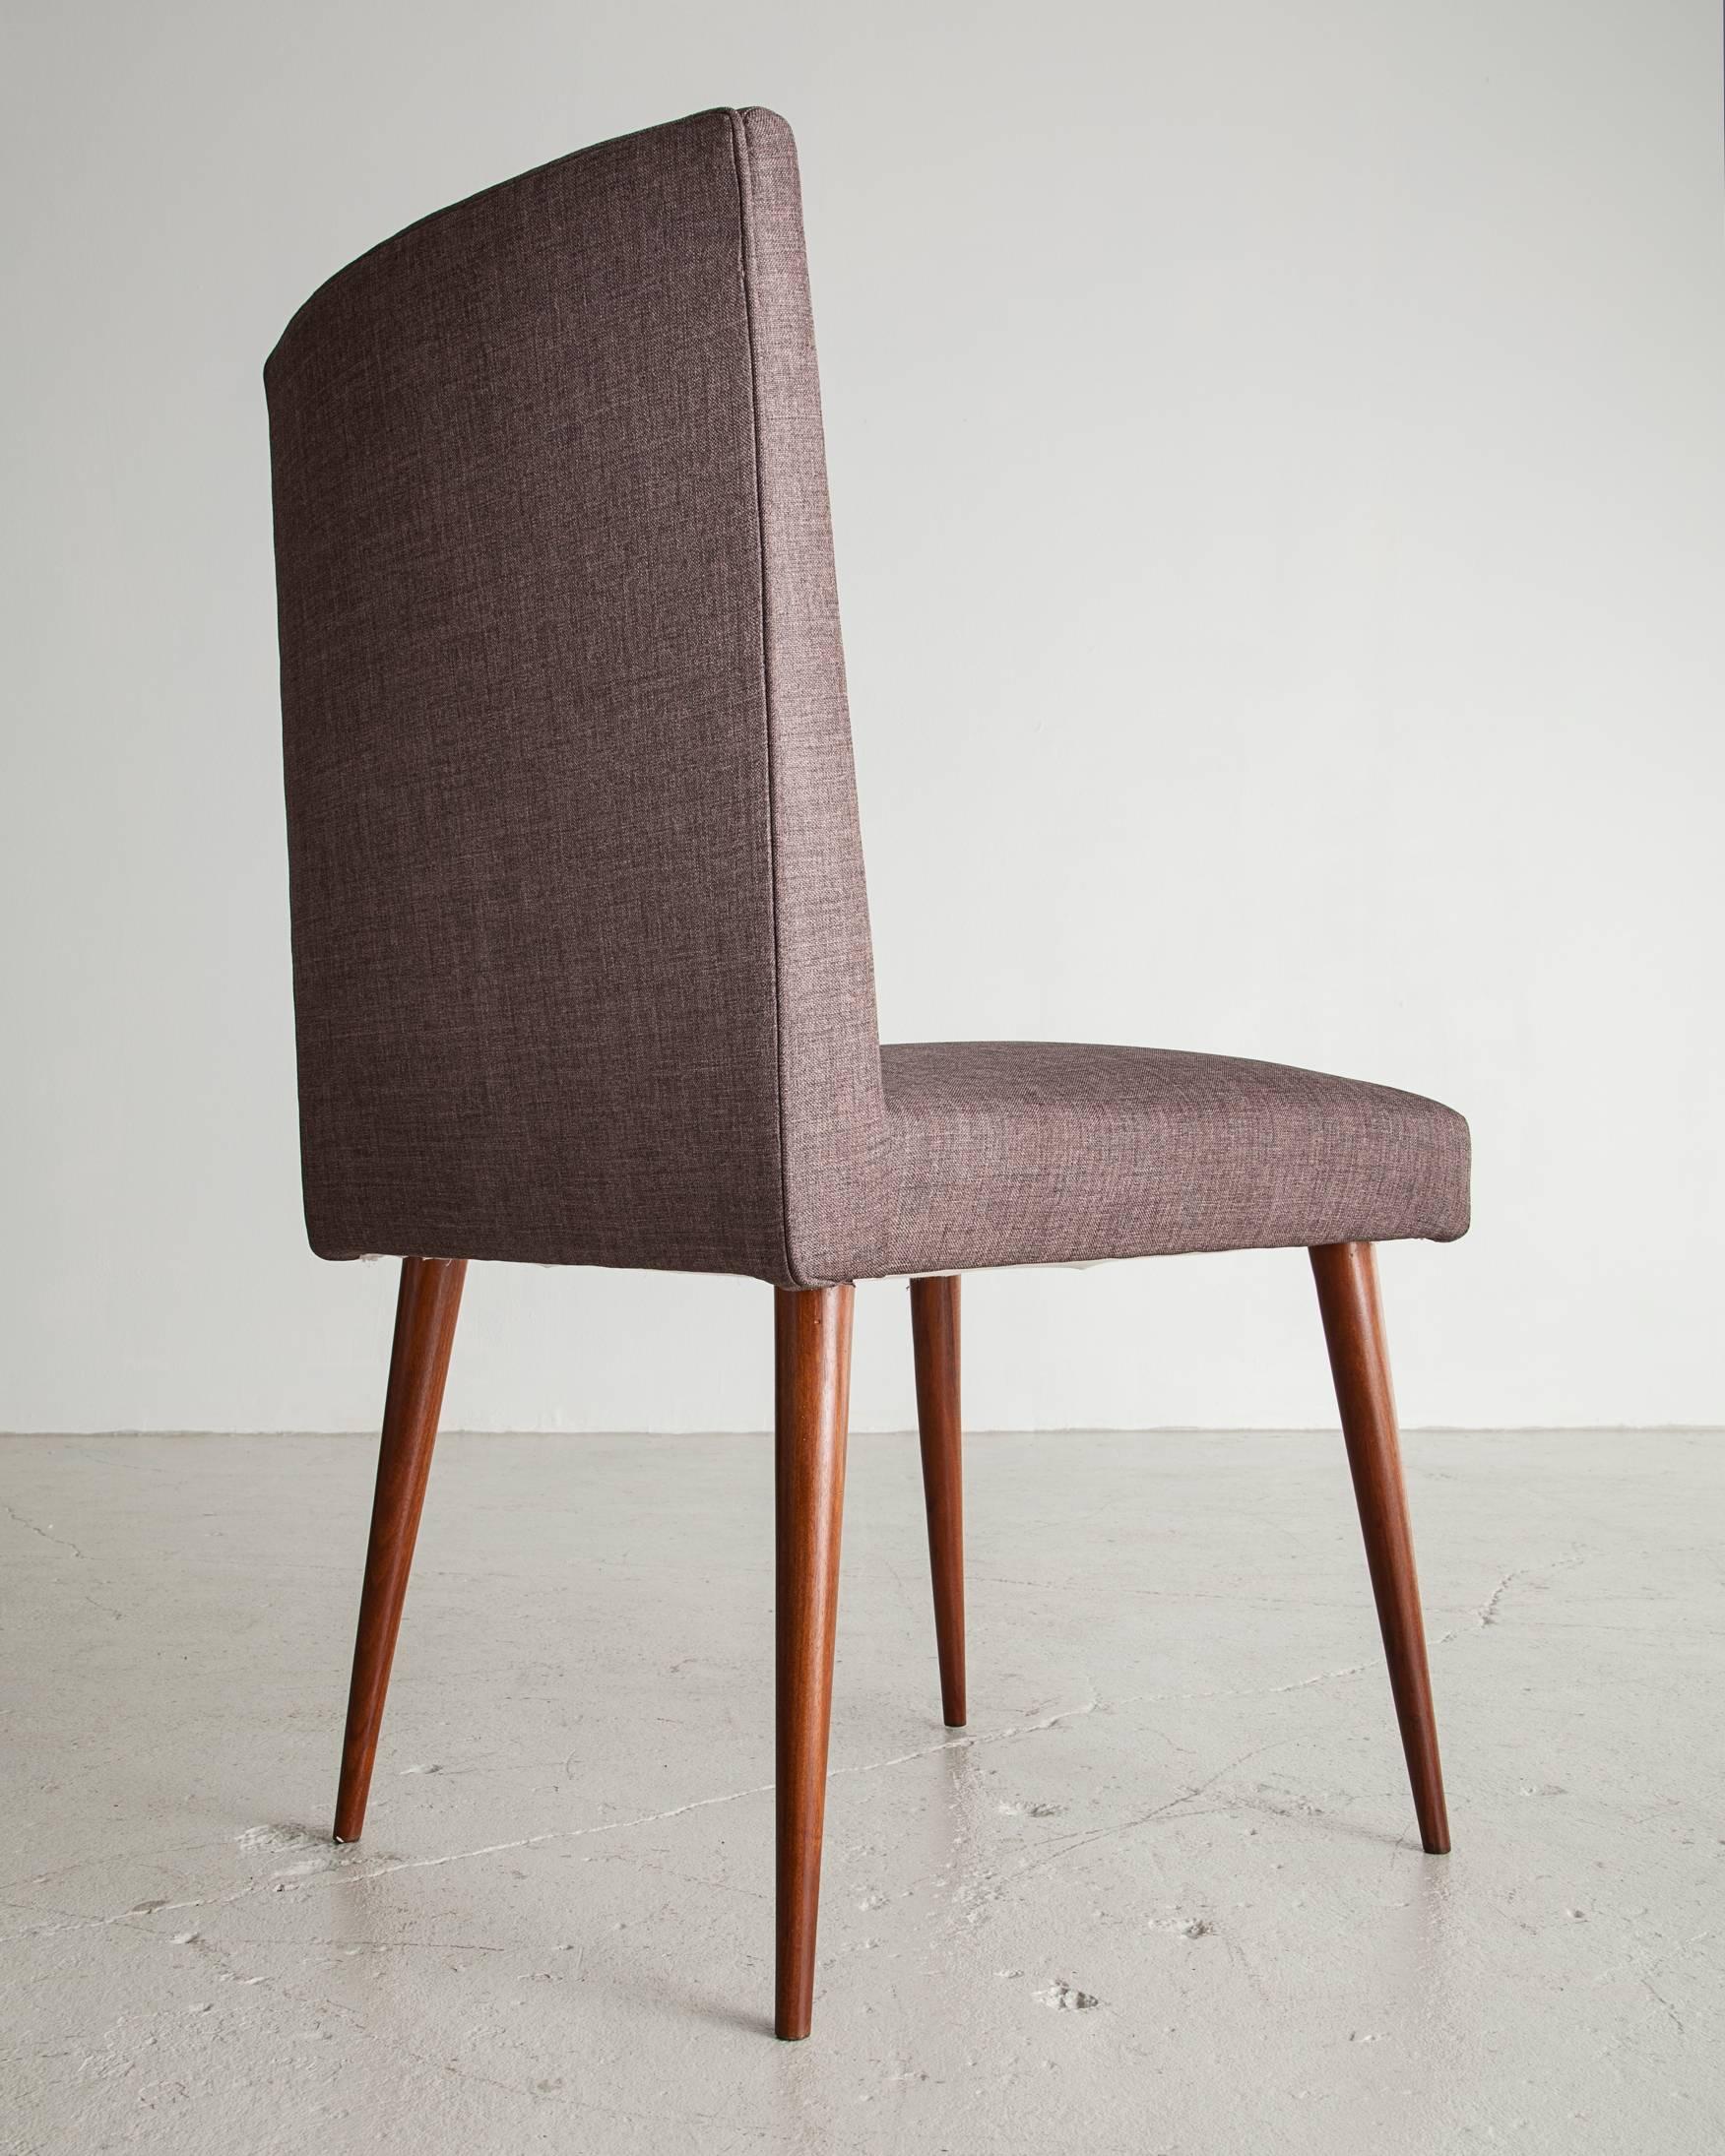 20th Century Chair in Solid Brazilian Hardwood